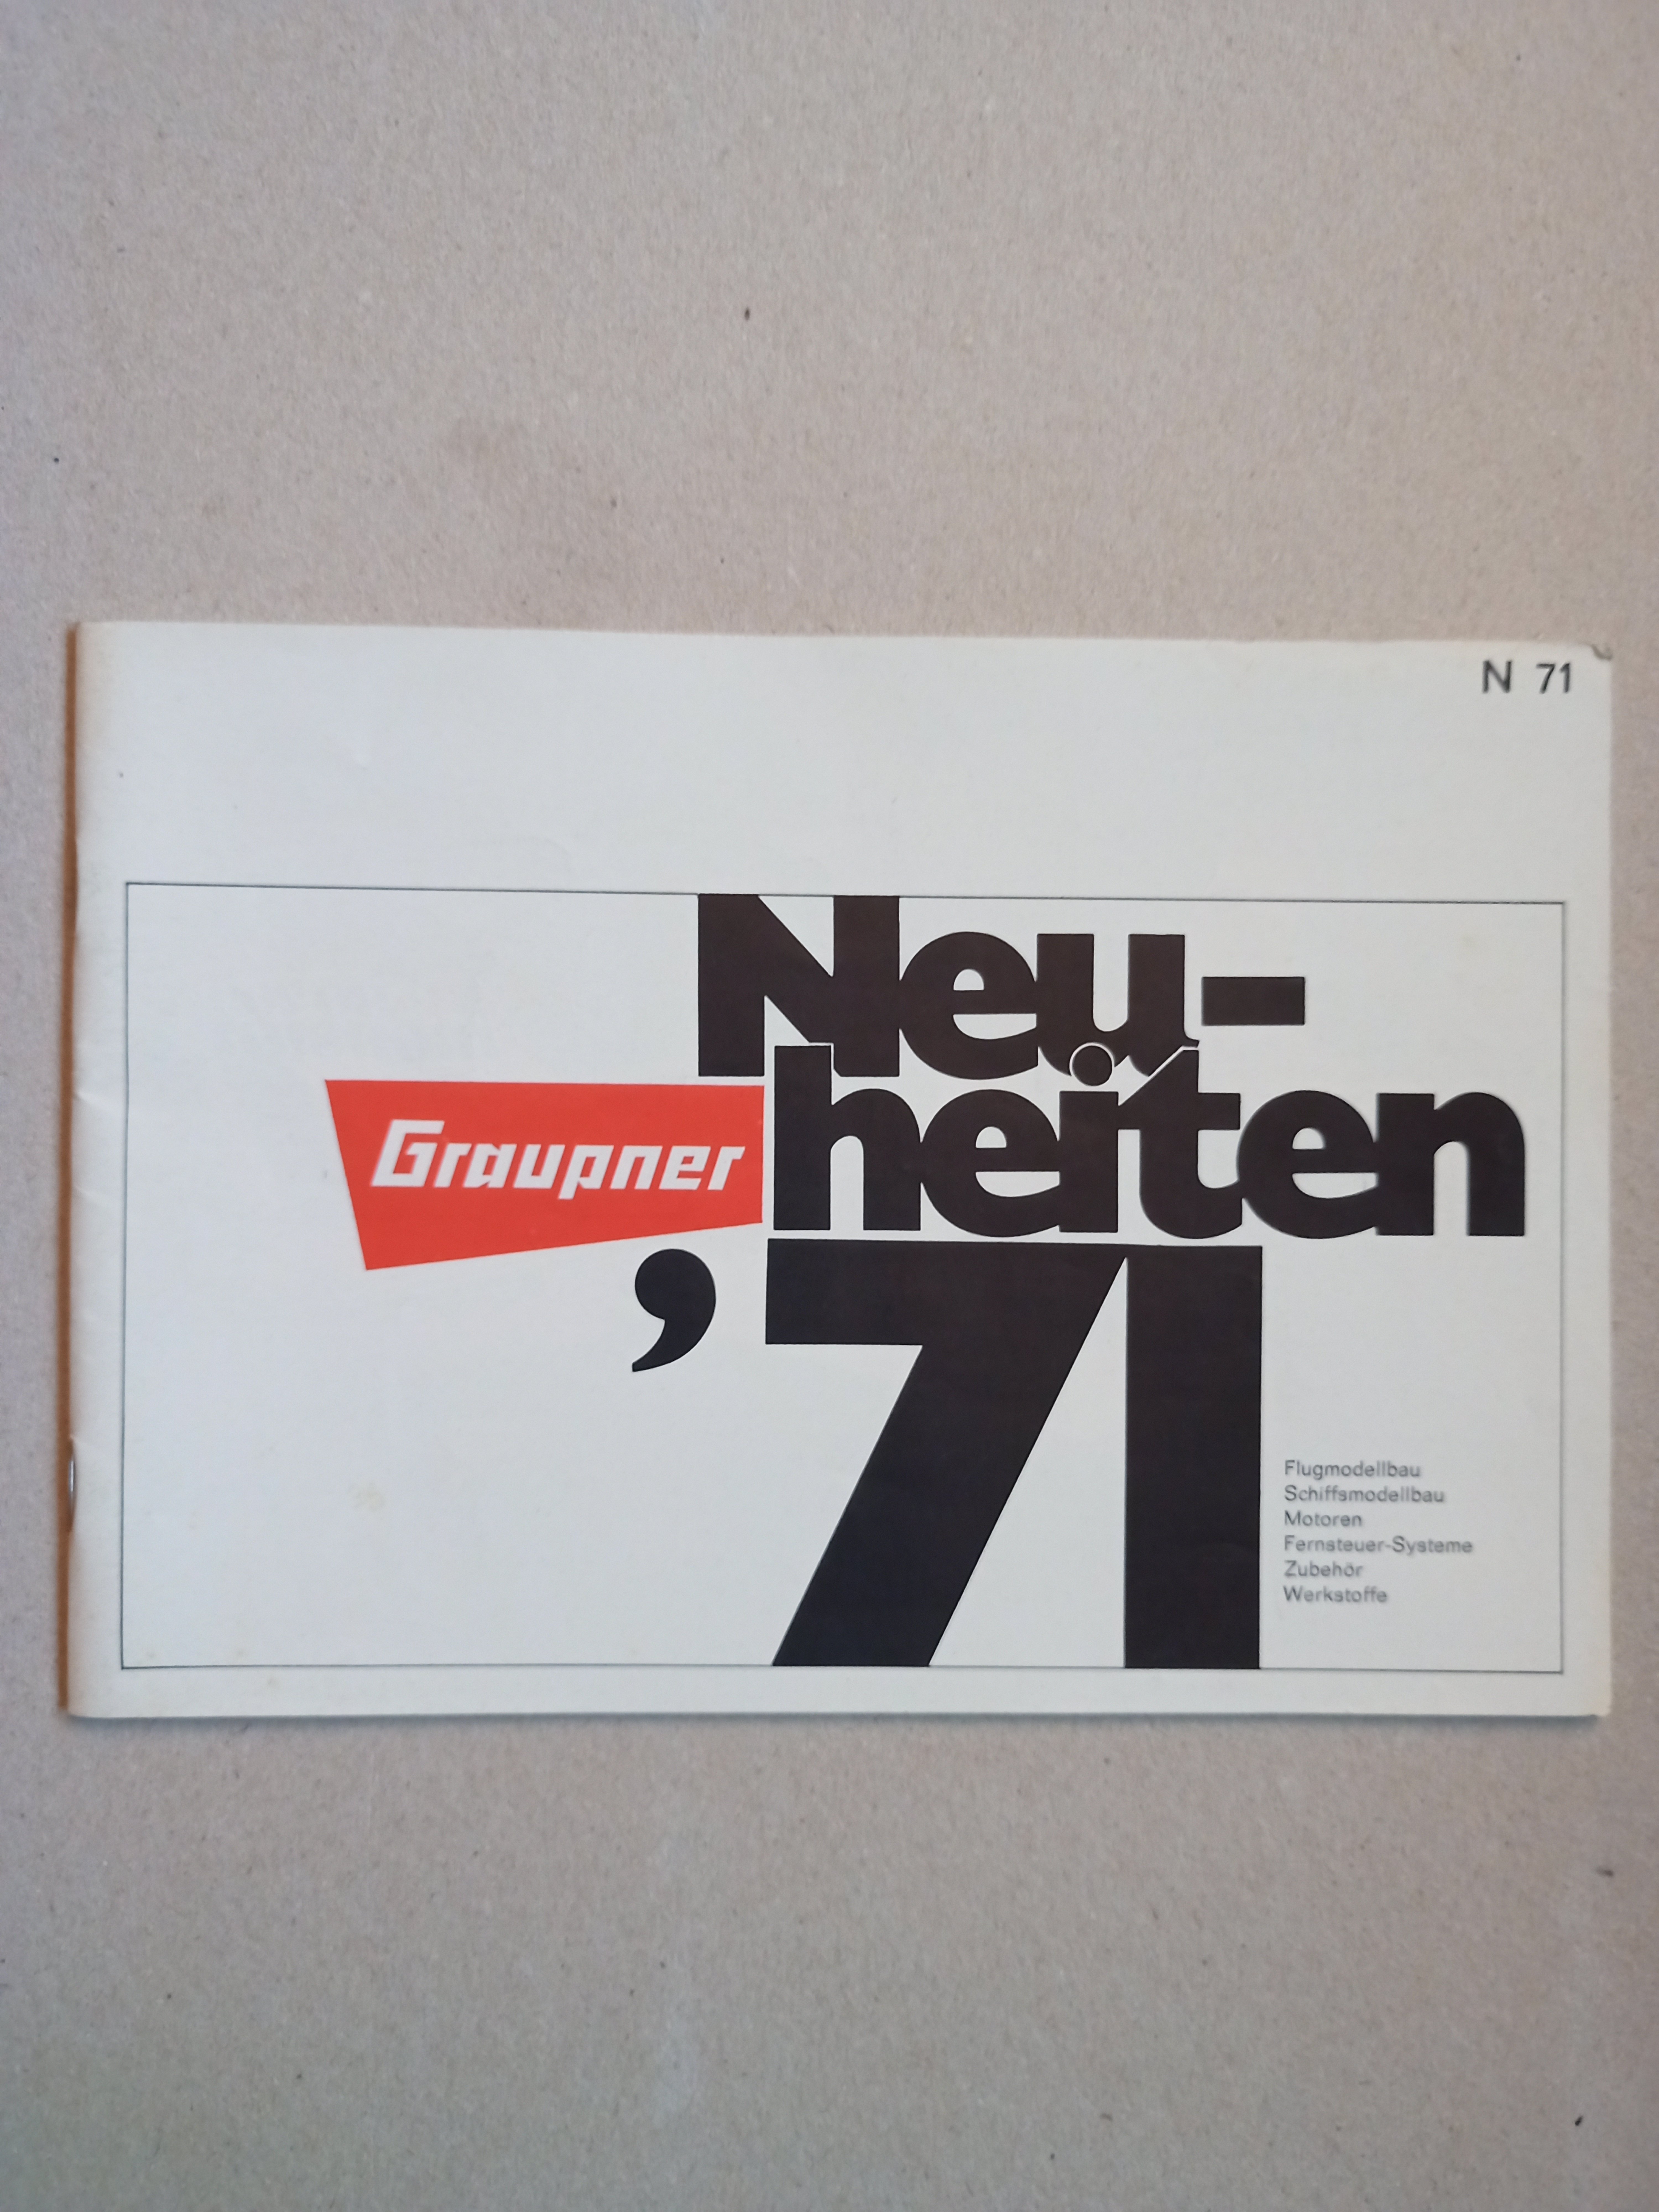 Graupner Neuheiten 1971 (Deutsches Segelflugmuseum mit Modellflug CC BY-NC-SA)